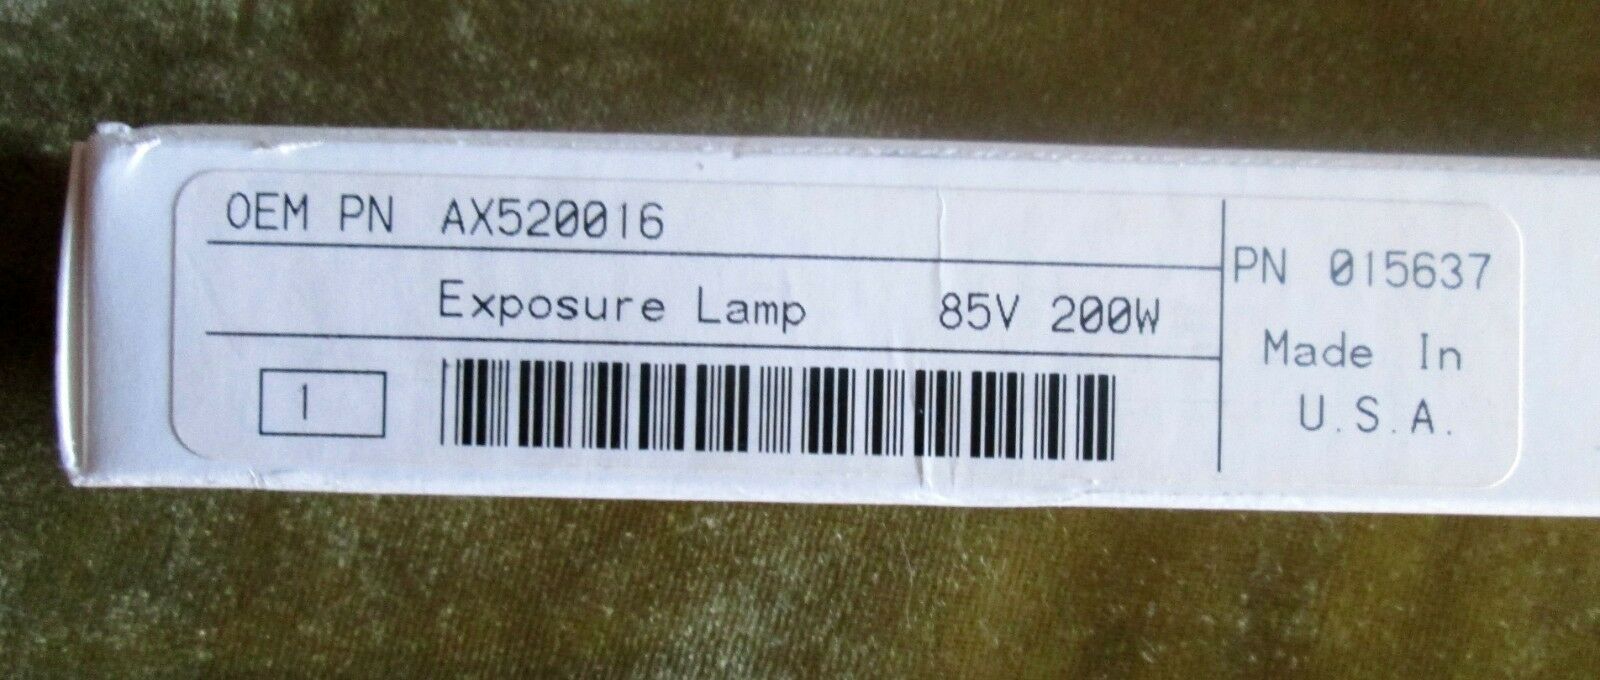 Tungsten Halogen Lamp / bulb AX520016 in box